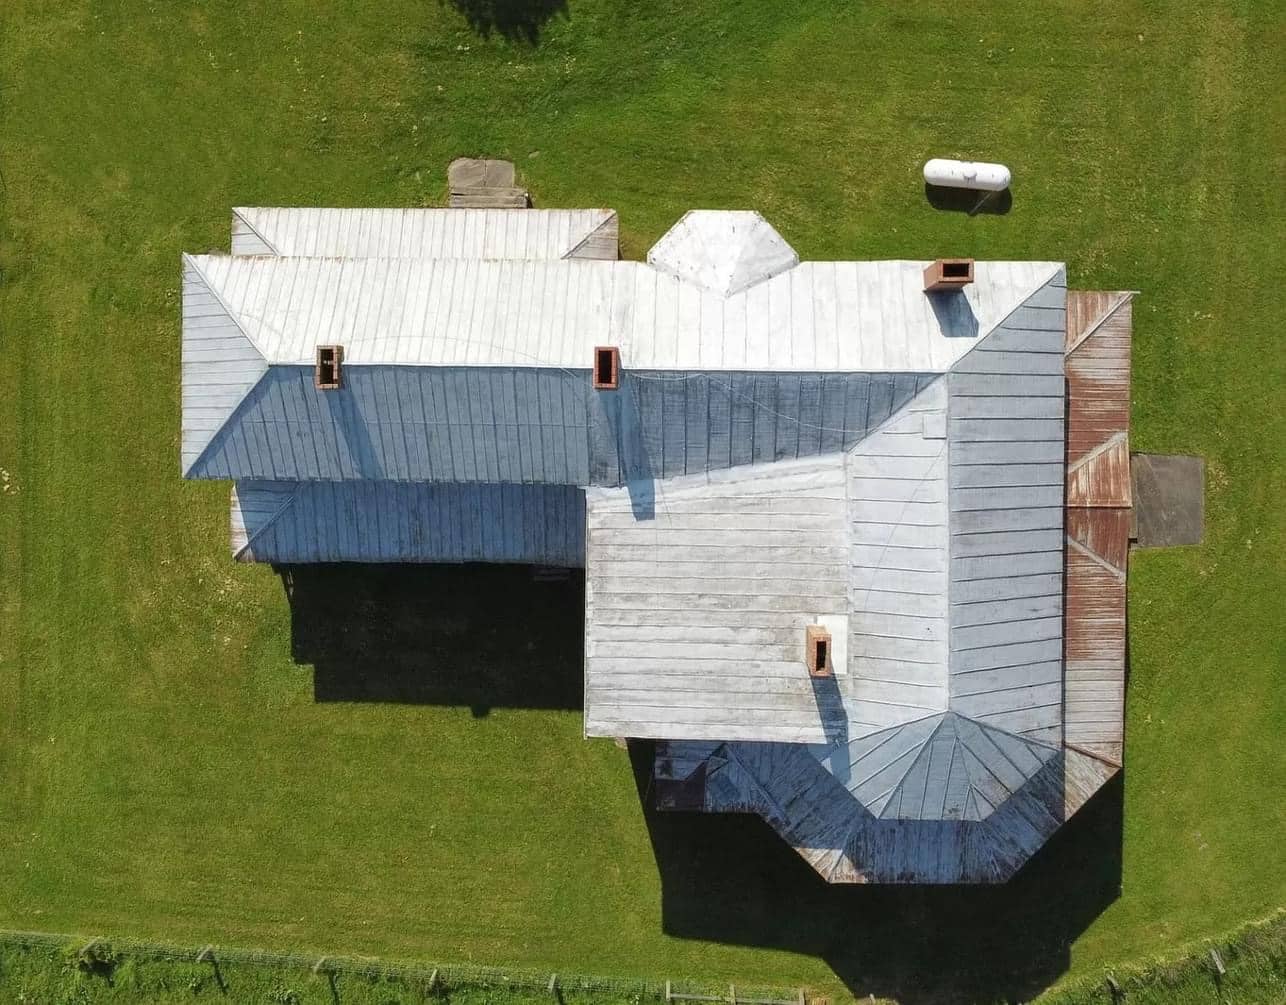 1840 Farmhouse For Sale In Alderson West Virginia